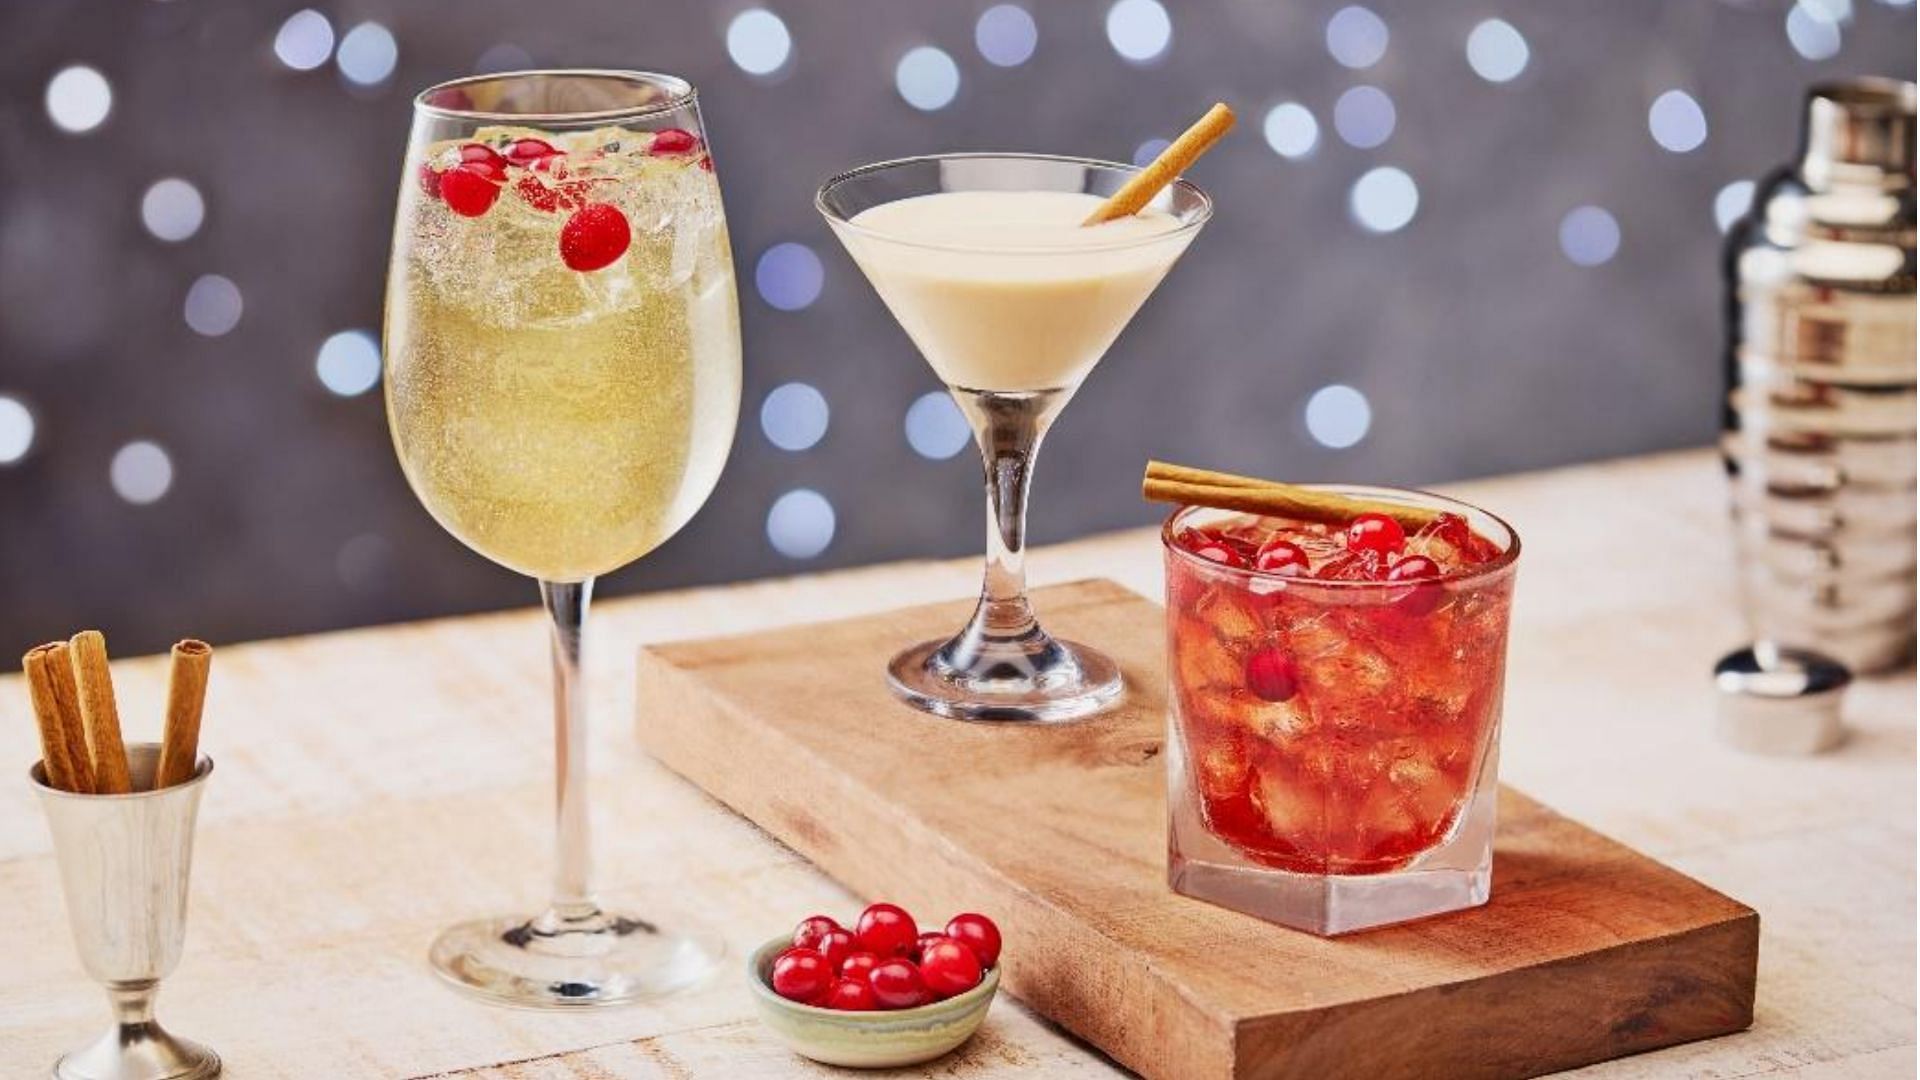 Promotional image for Fireside Martini, Snowglobe Sangria, and Cran-Apple Smash cocktails (Image via Red Lobster)